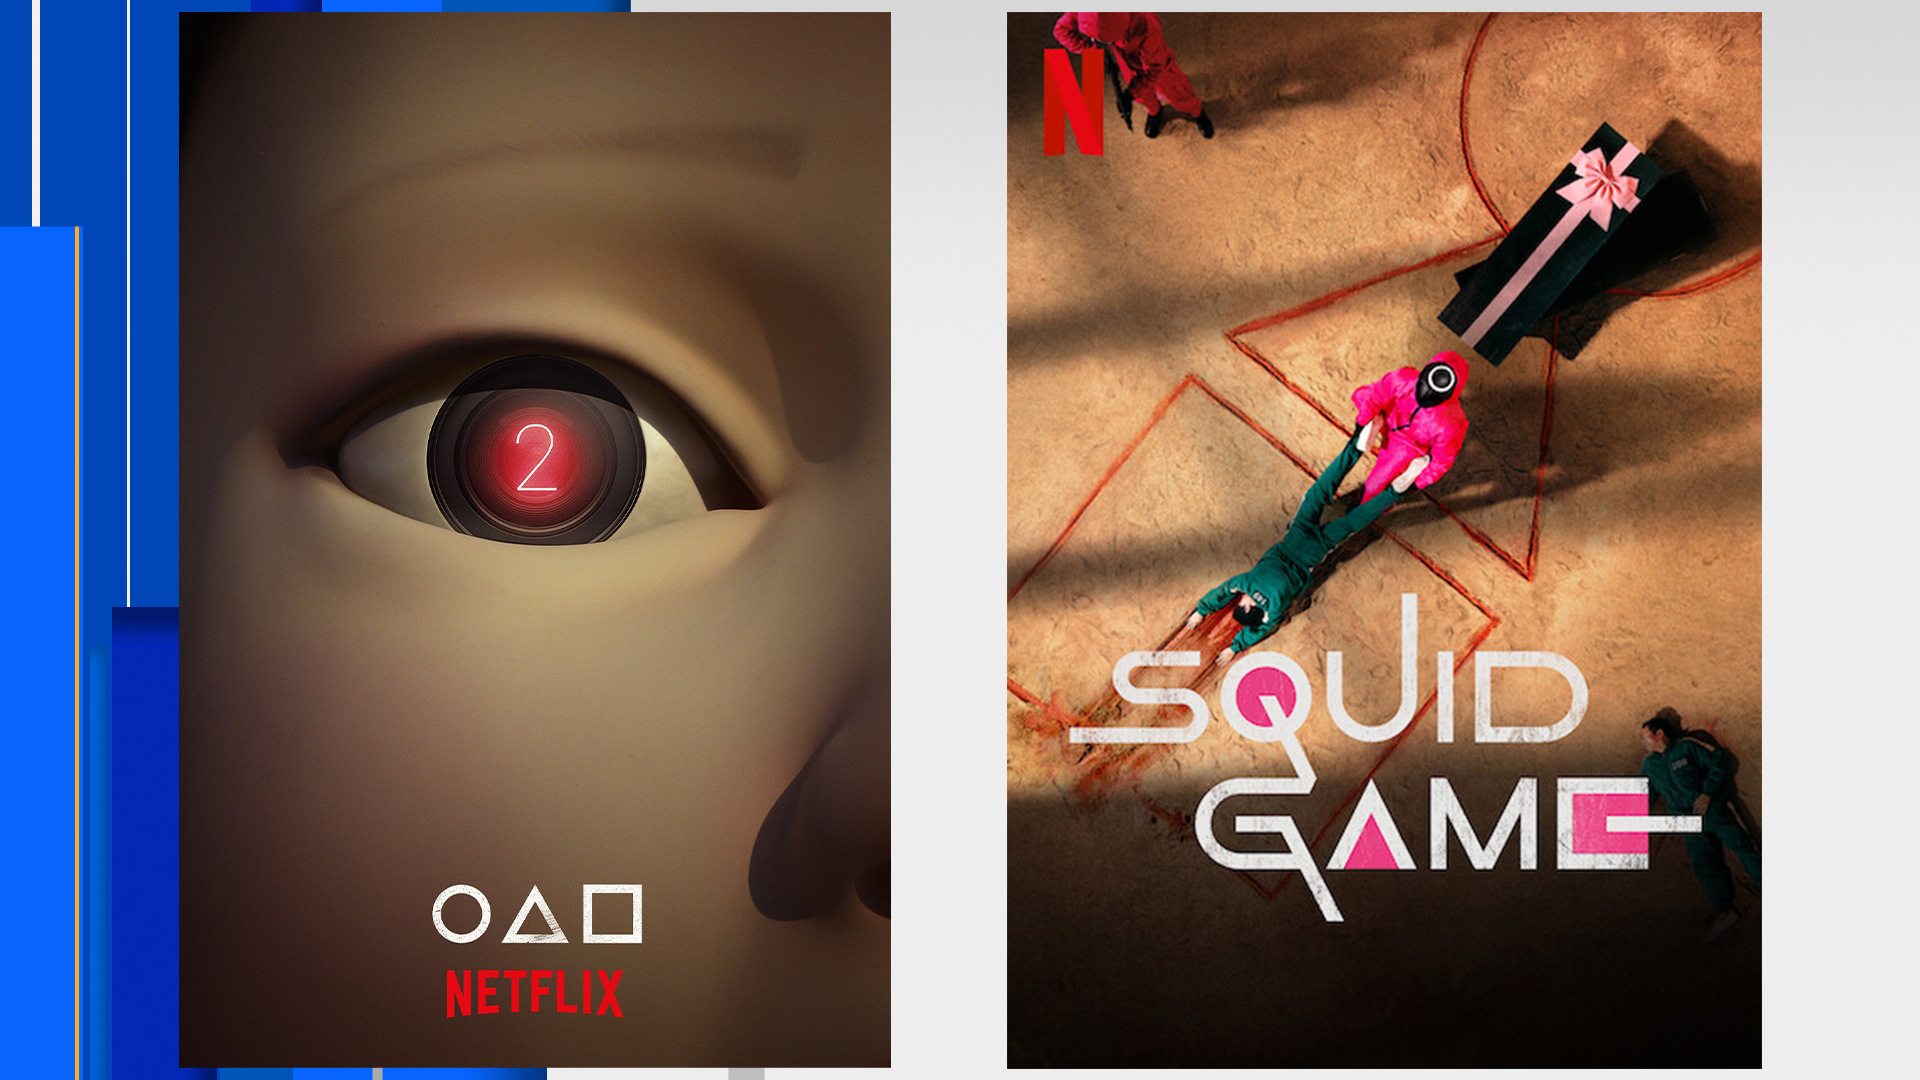 Netflix announces the cast for 'Squid Game 2